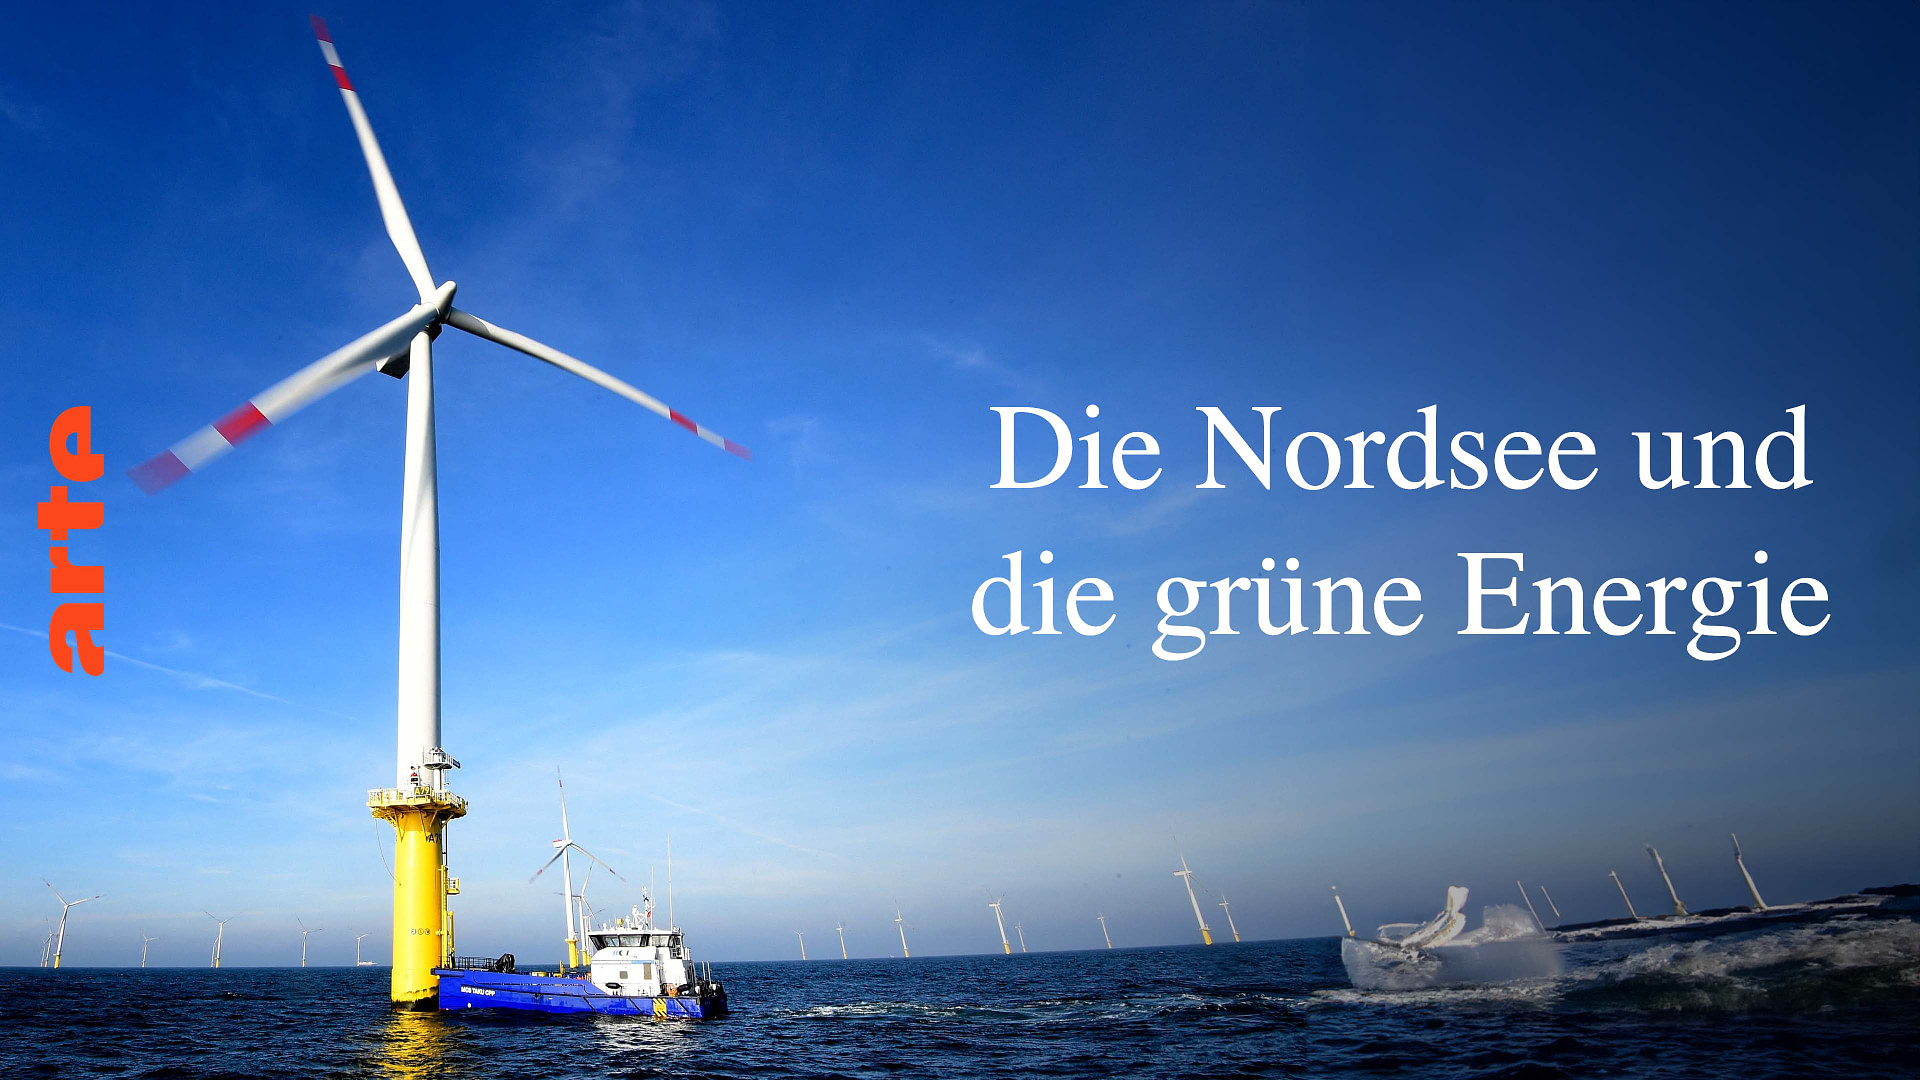 Die Nordsee - bald Europas größtes grünes Kraftwerk?